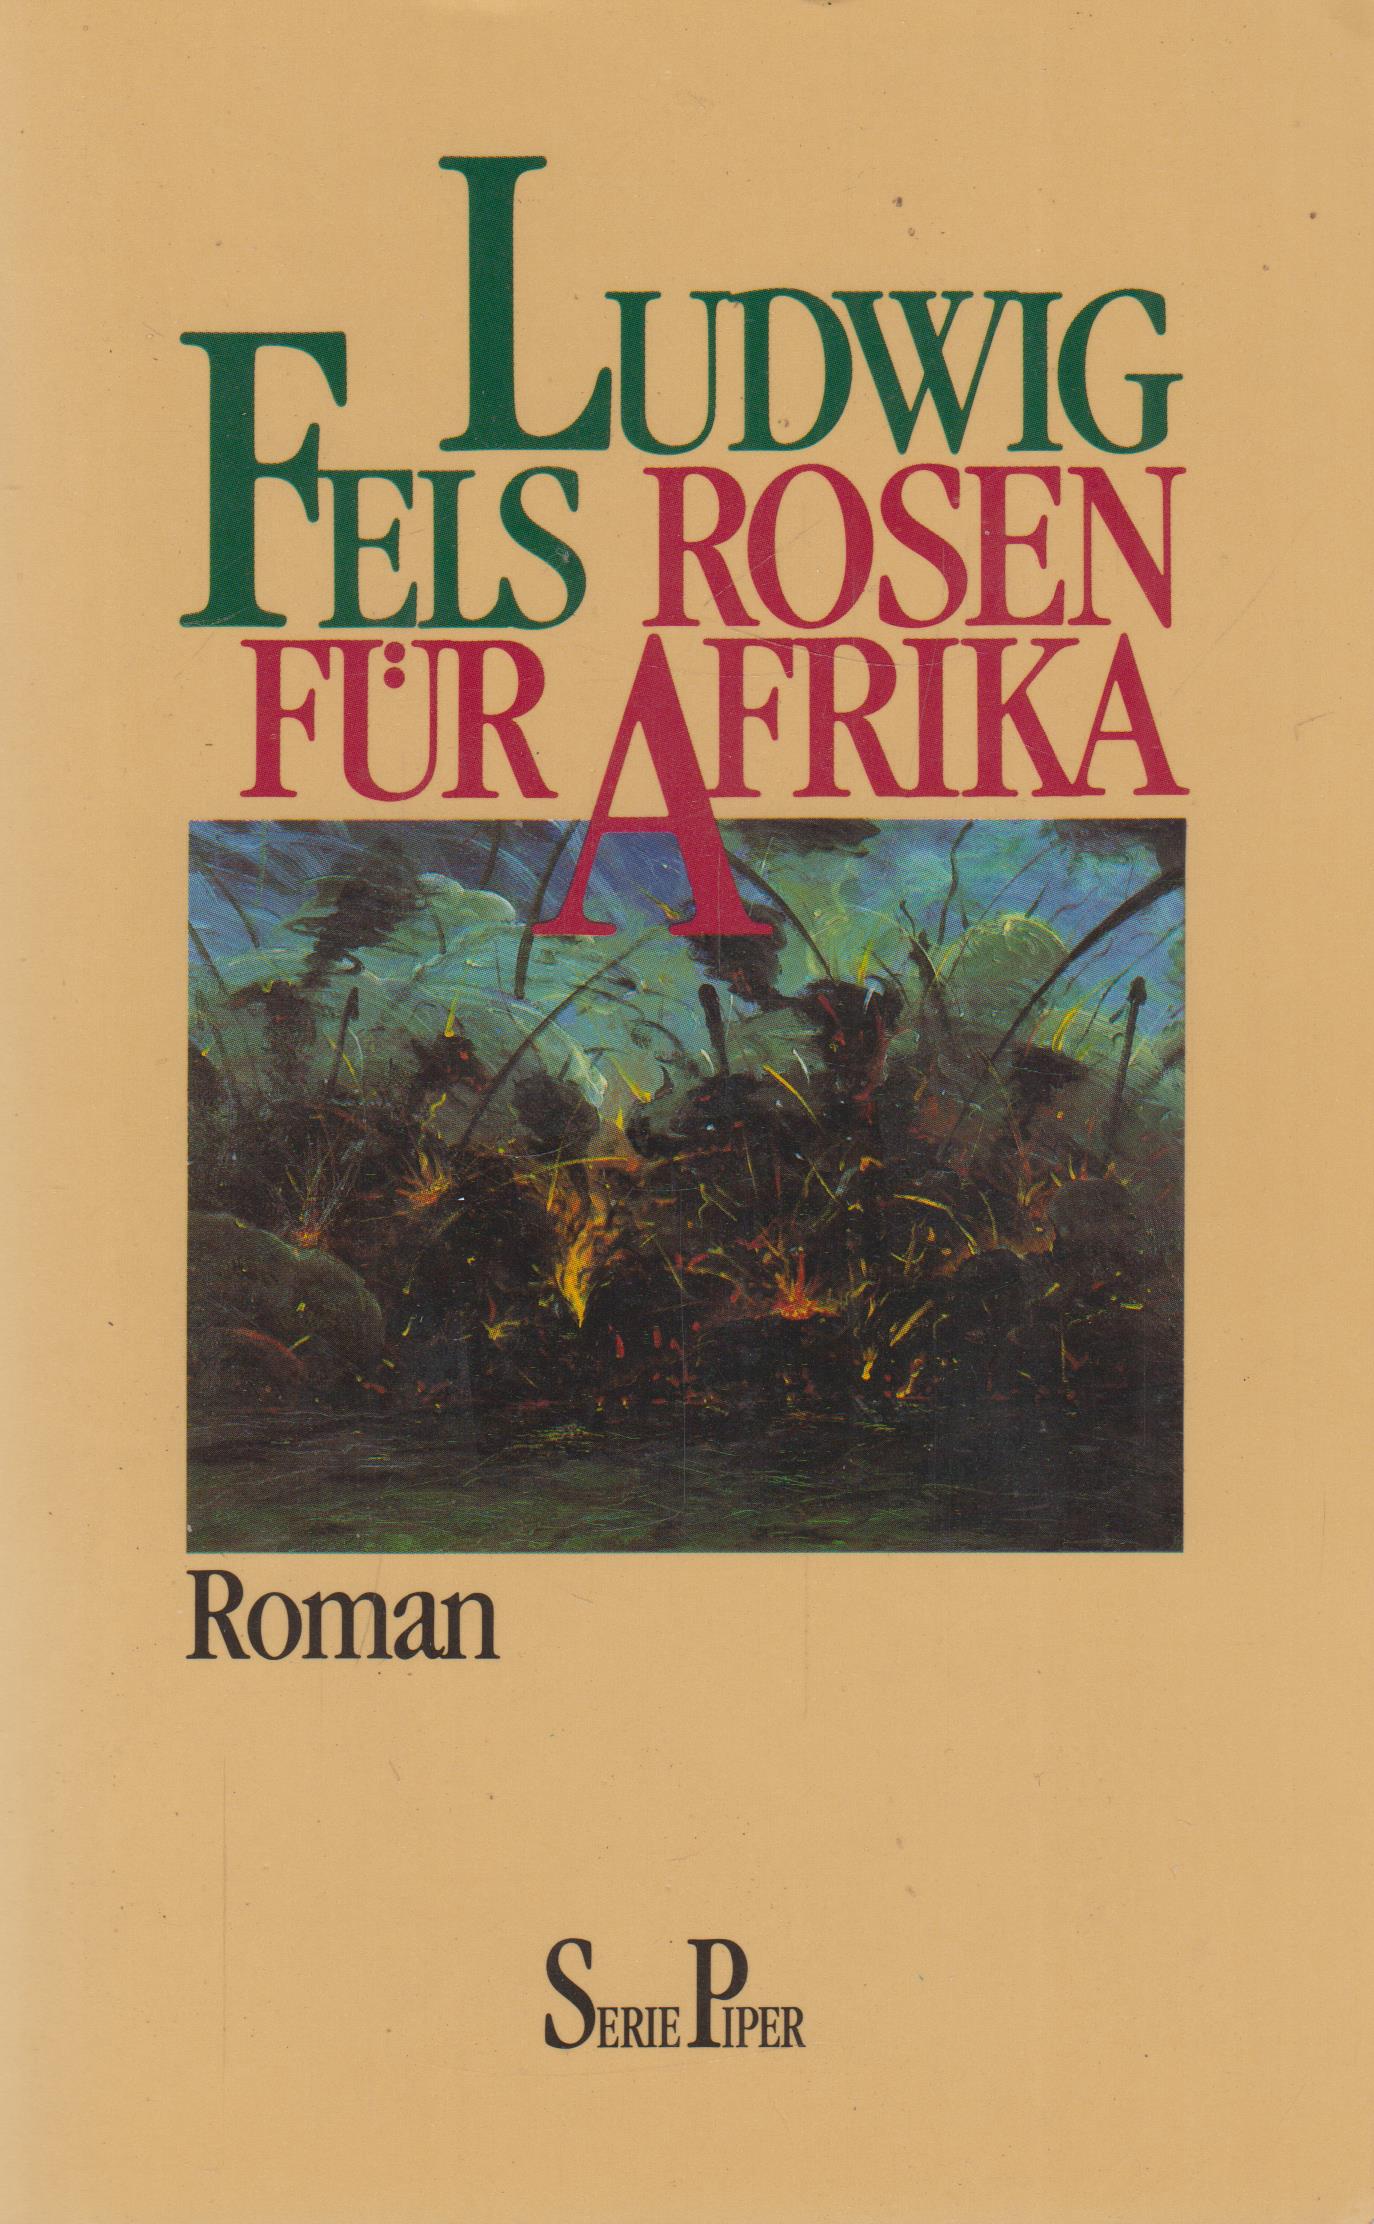 Rosen für Afrika Roman - Fels, Ludwig